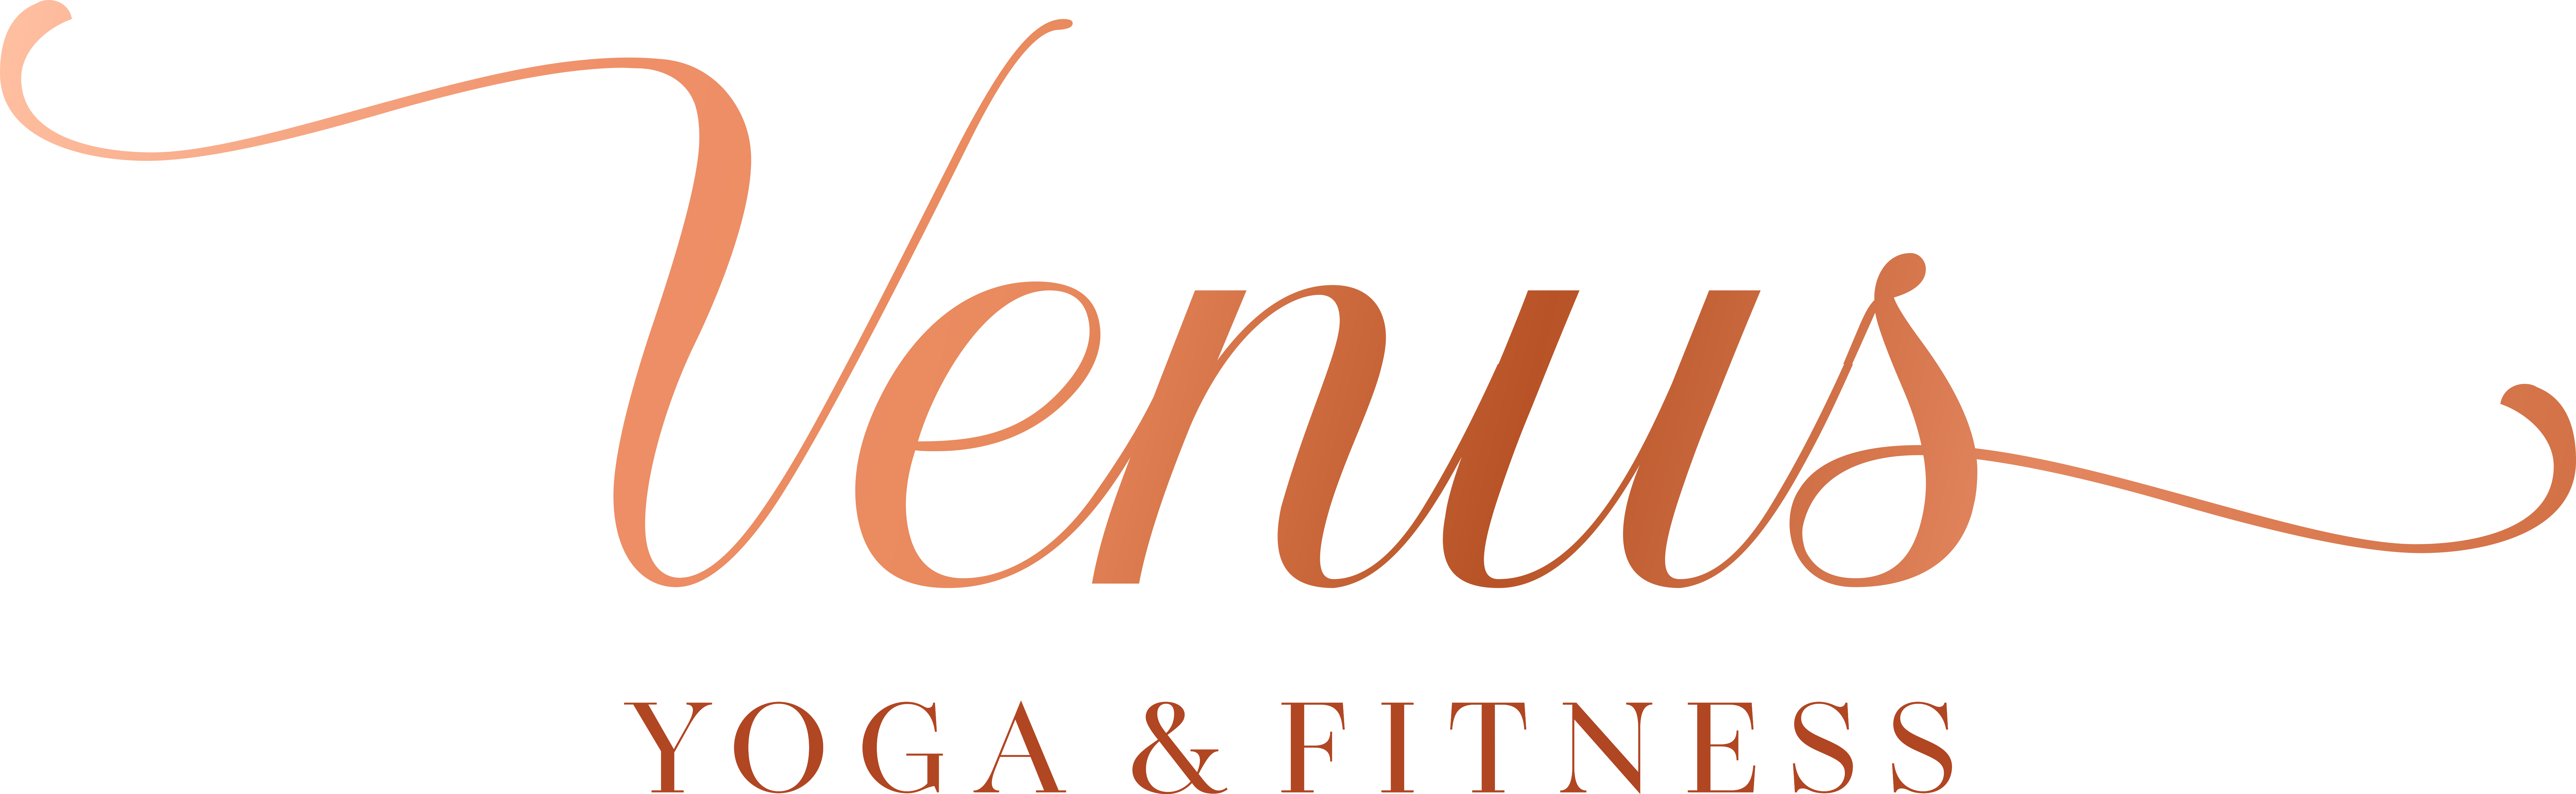 Venus Yoga & Fitness Center